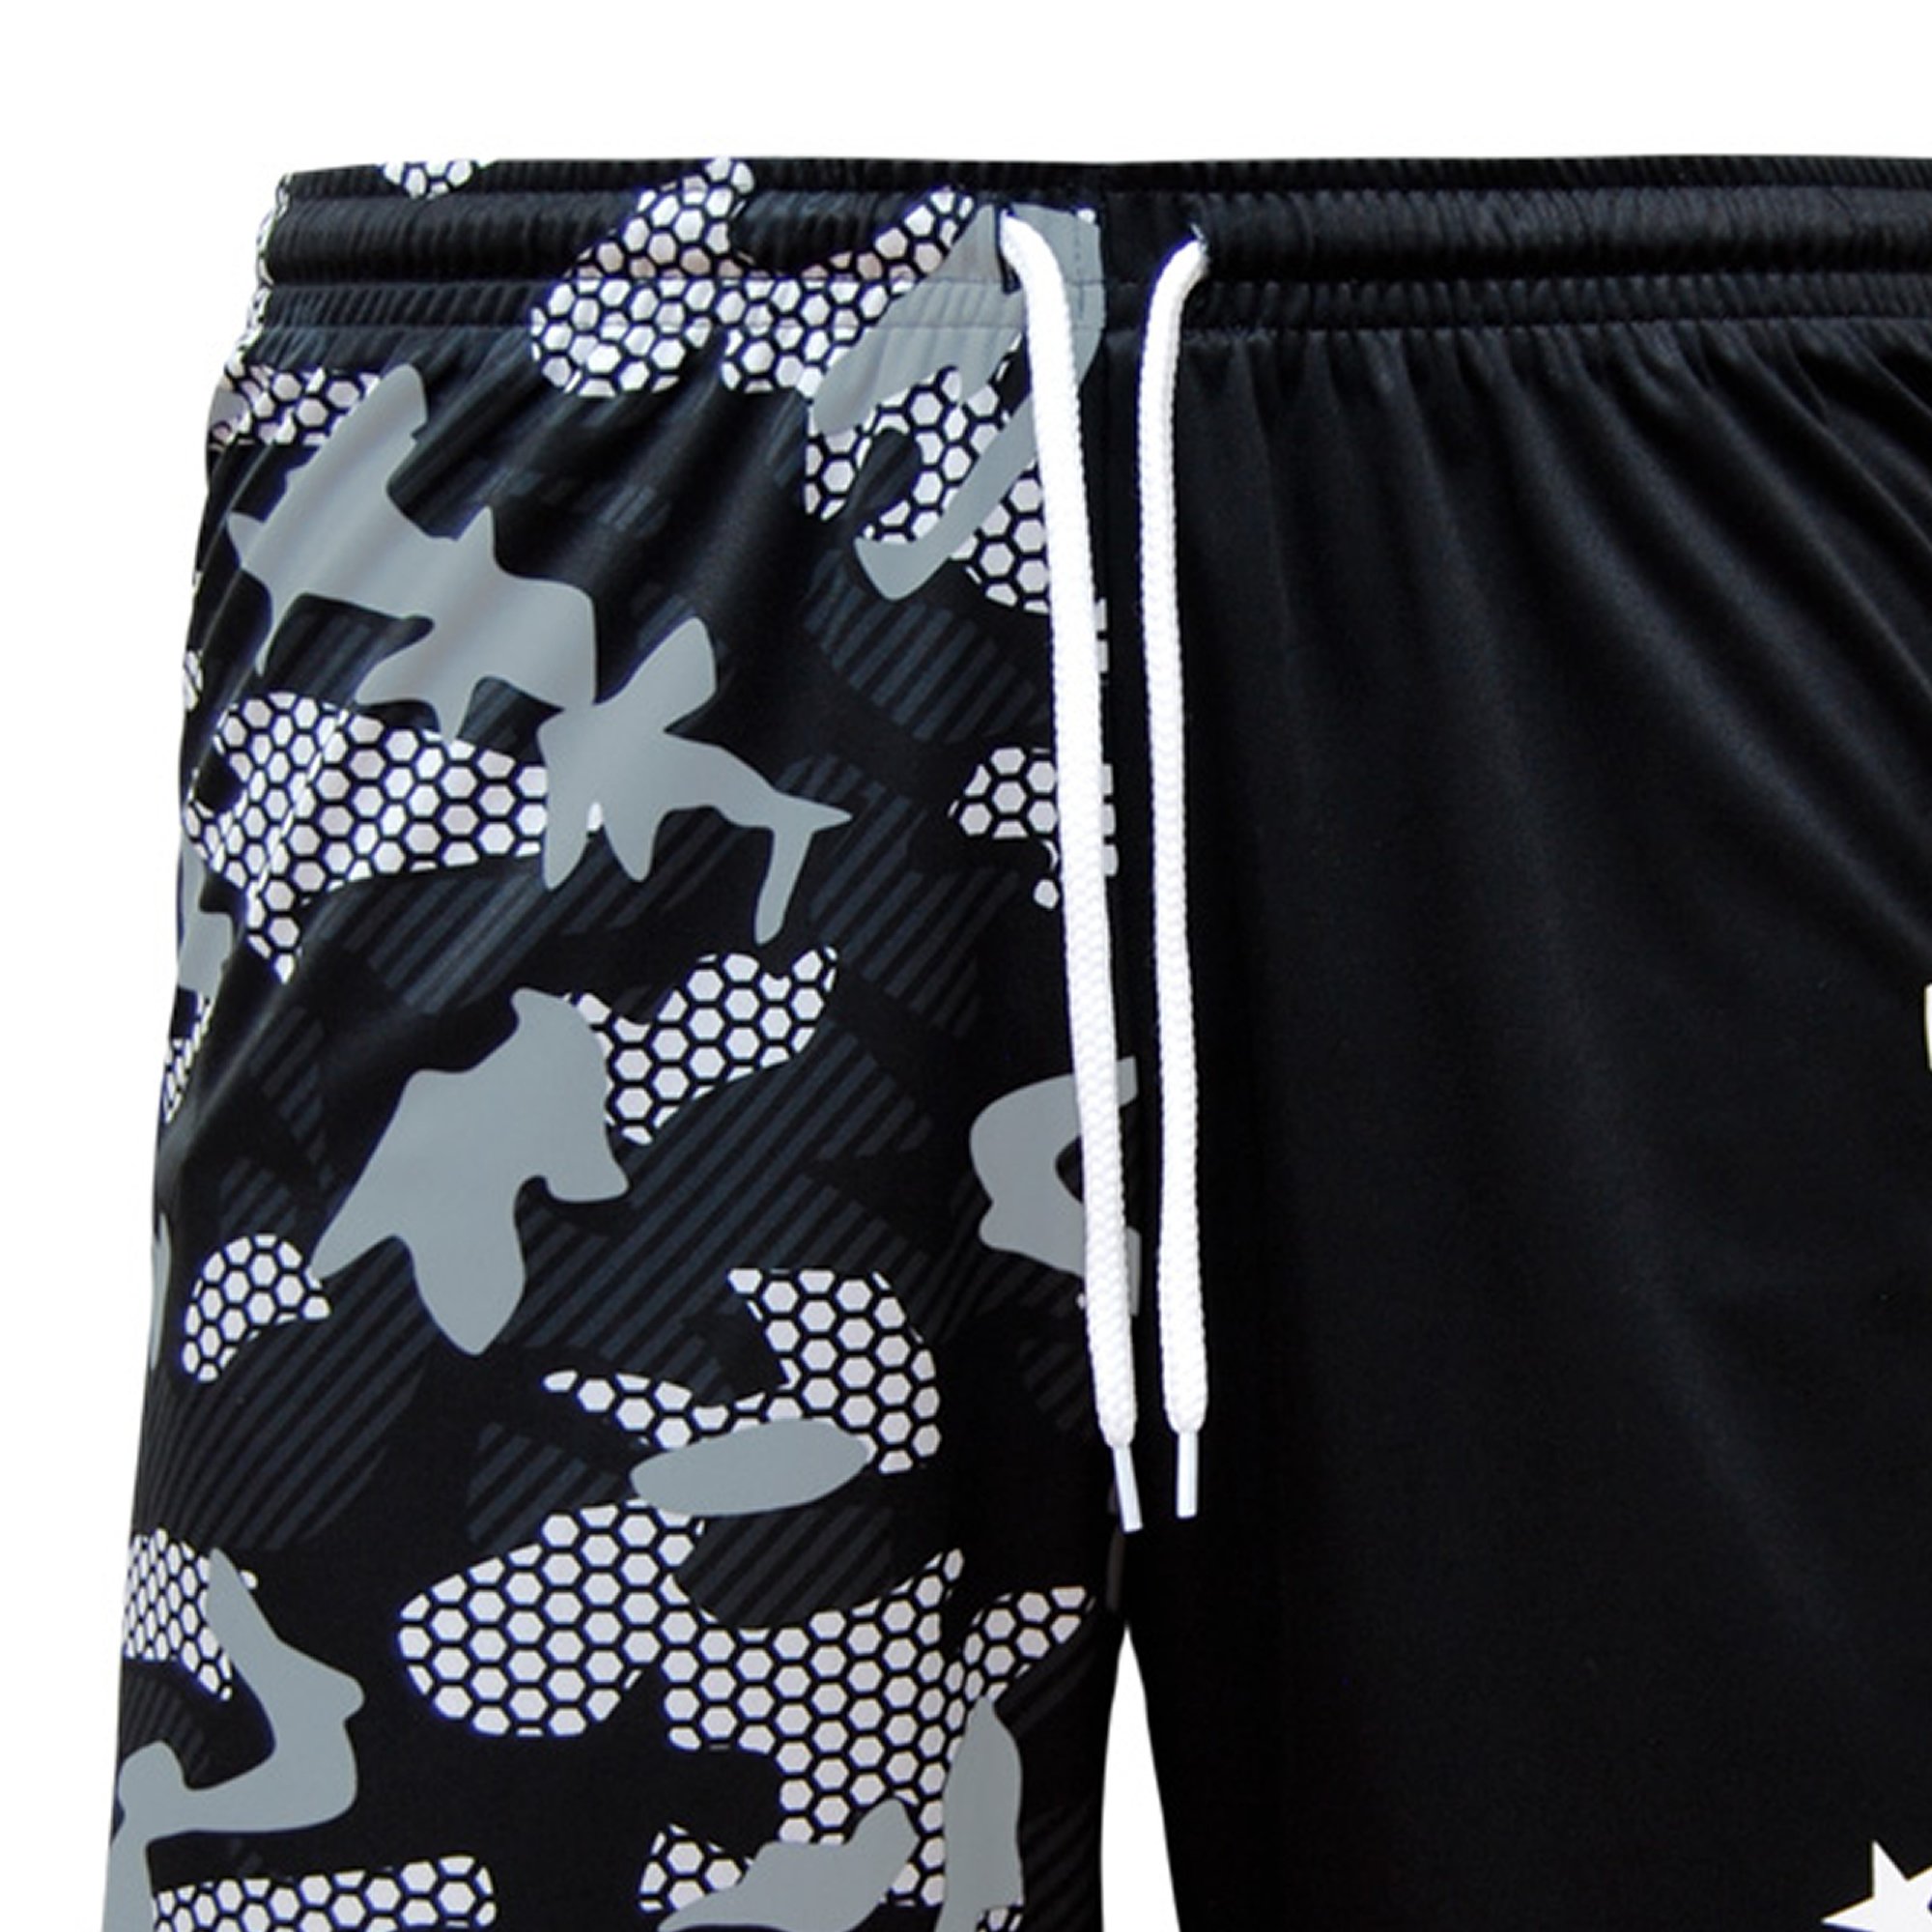 Mikasa Beach Style Shorts